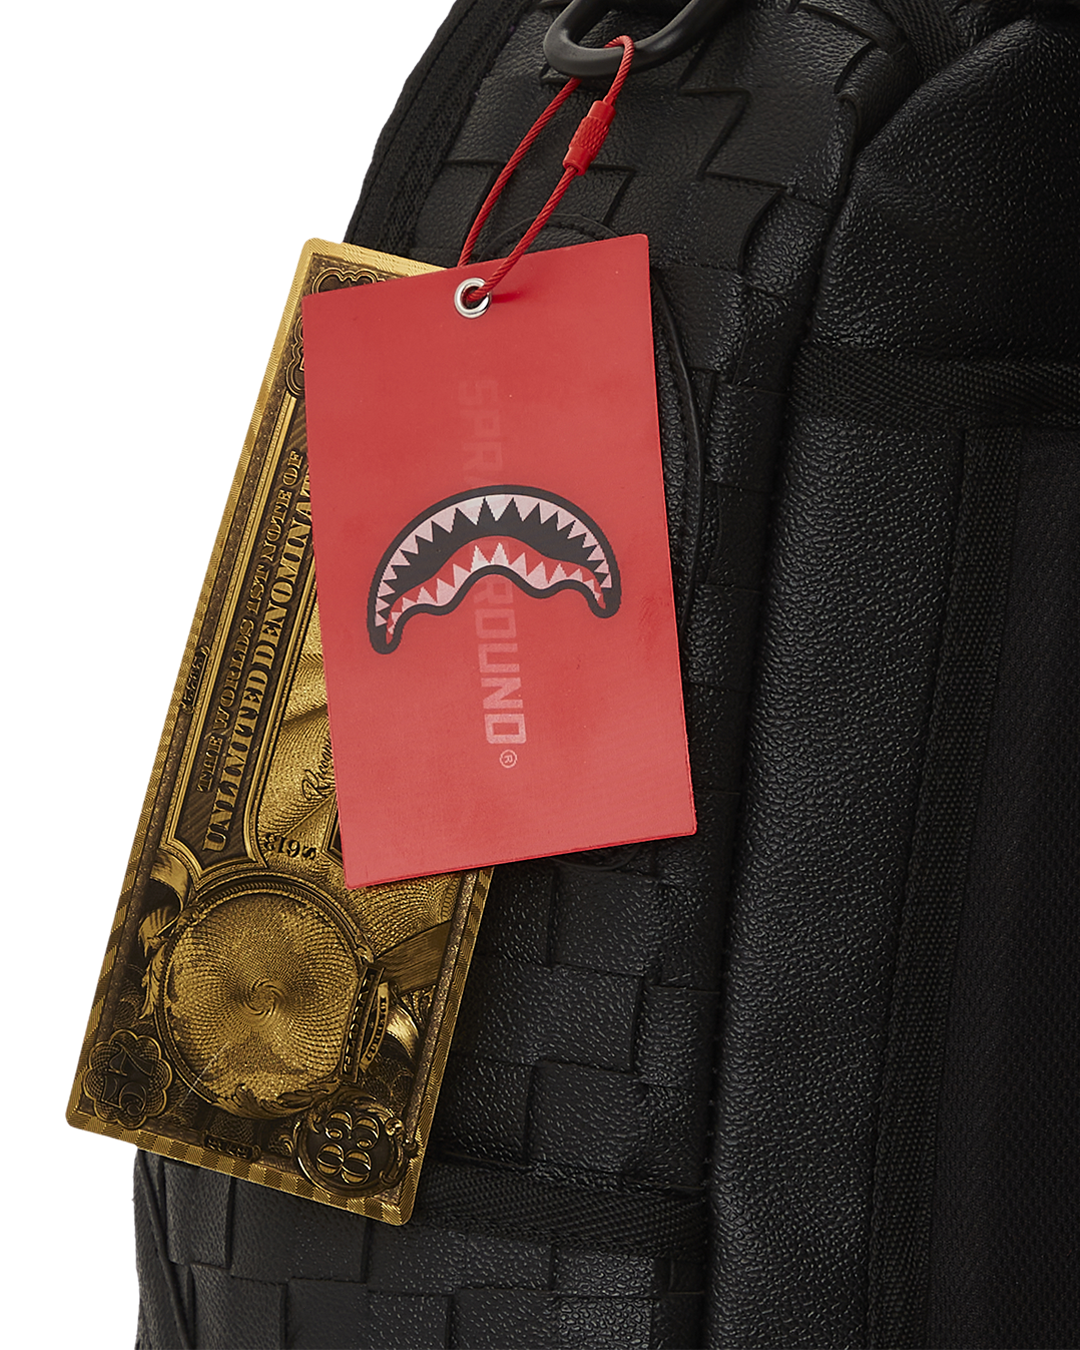 Sprayground Limited Edition Trinity Shark Backpack 100% Authentic